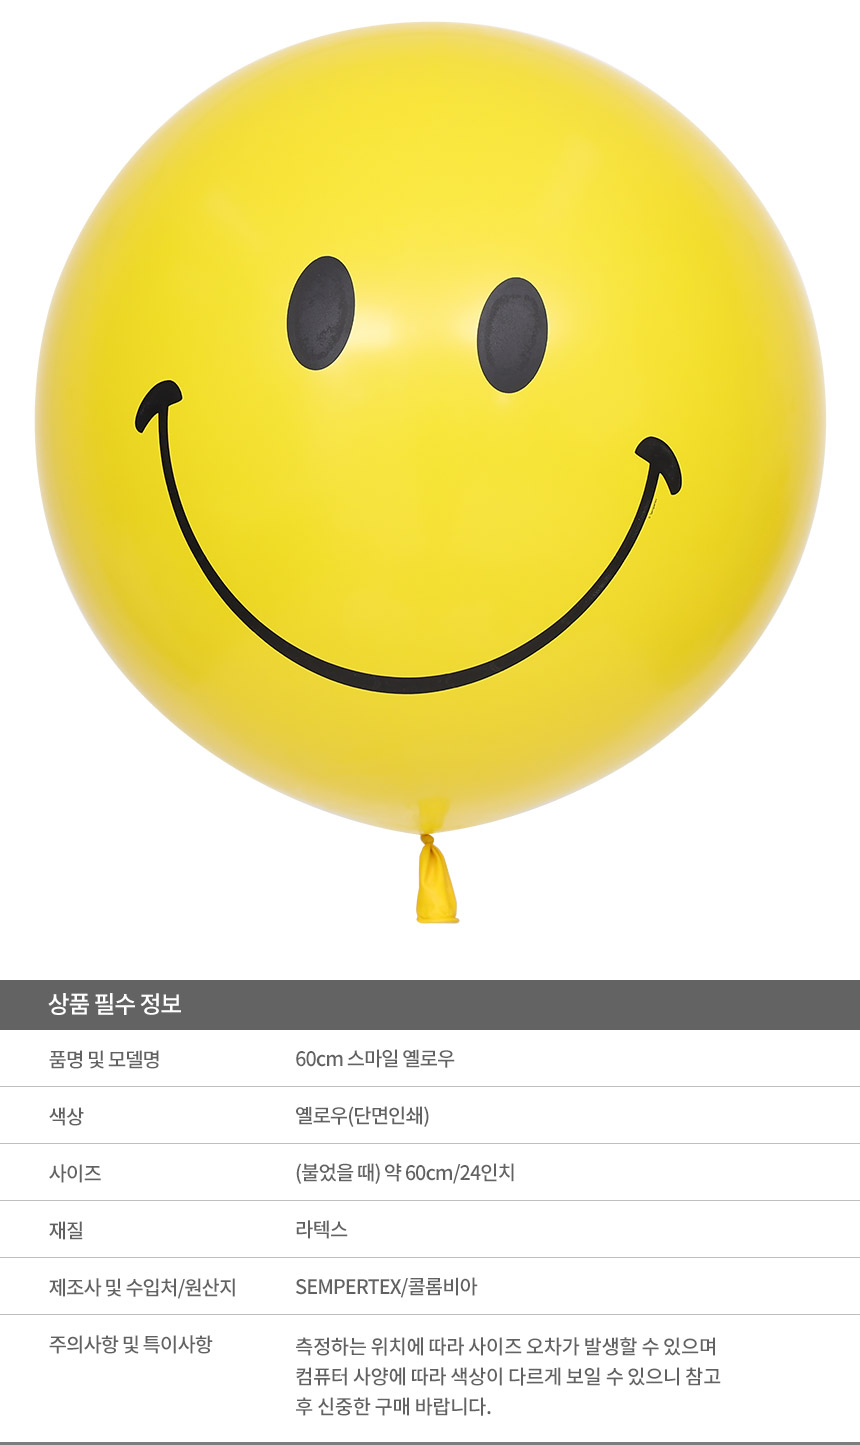 20201218_bigballoon_60cm_smile.jpg